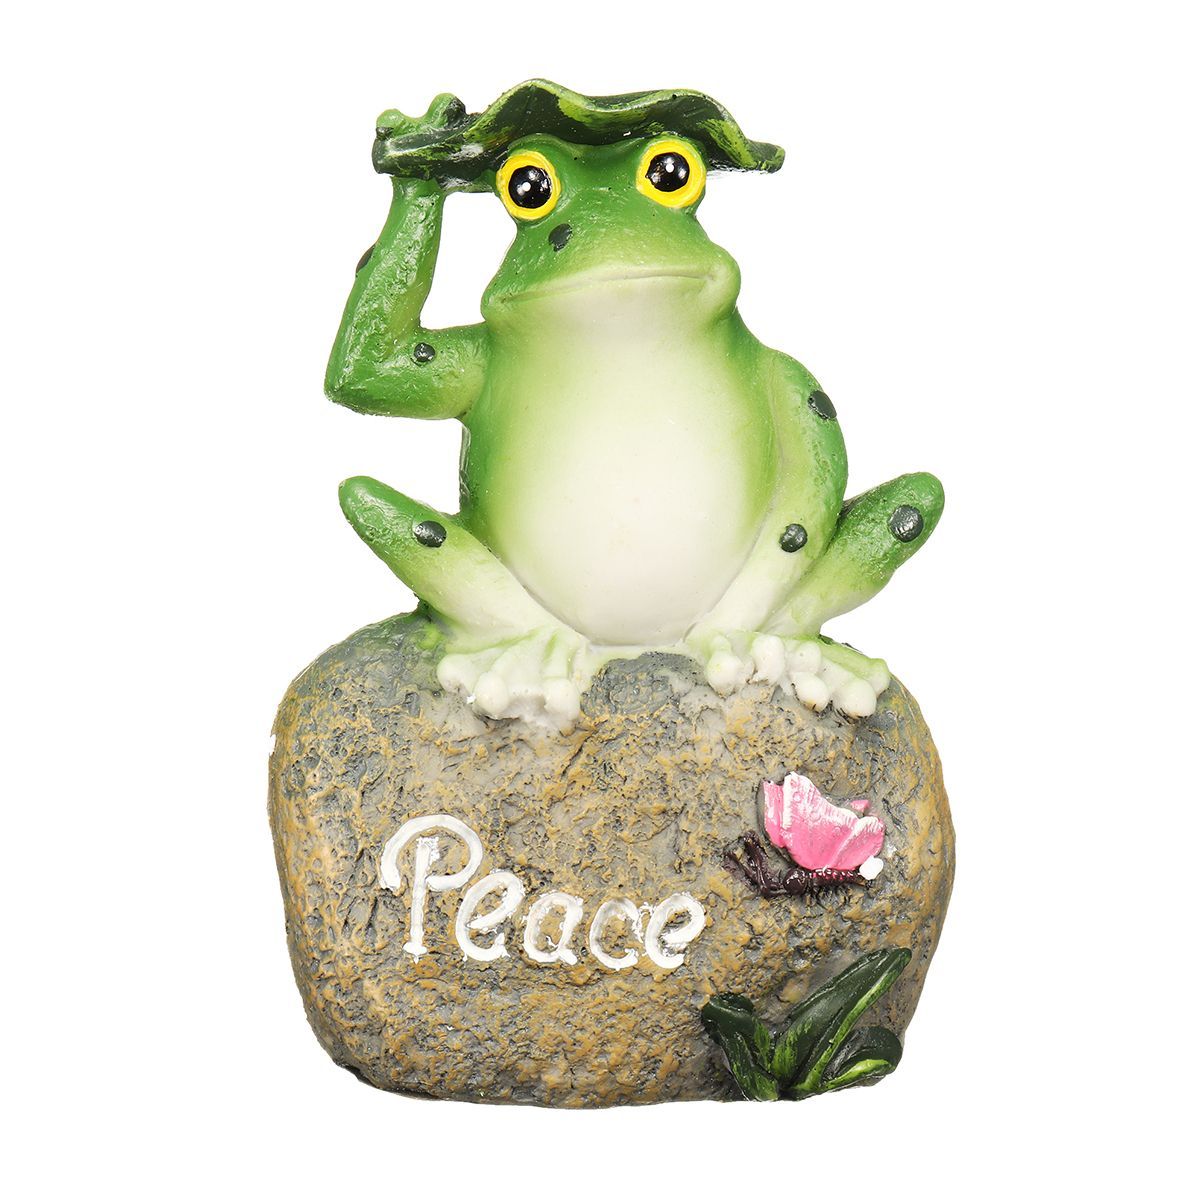 3pcs-Frogs-Garden-Statues-Art-Figurines-Outdoor-Patio-Ornament-1390134